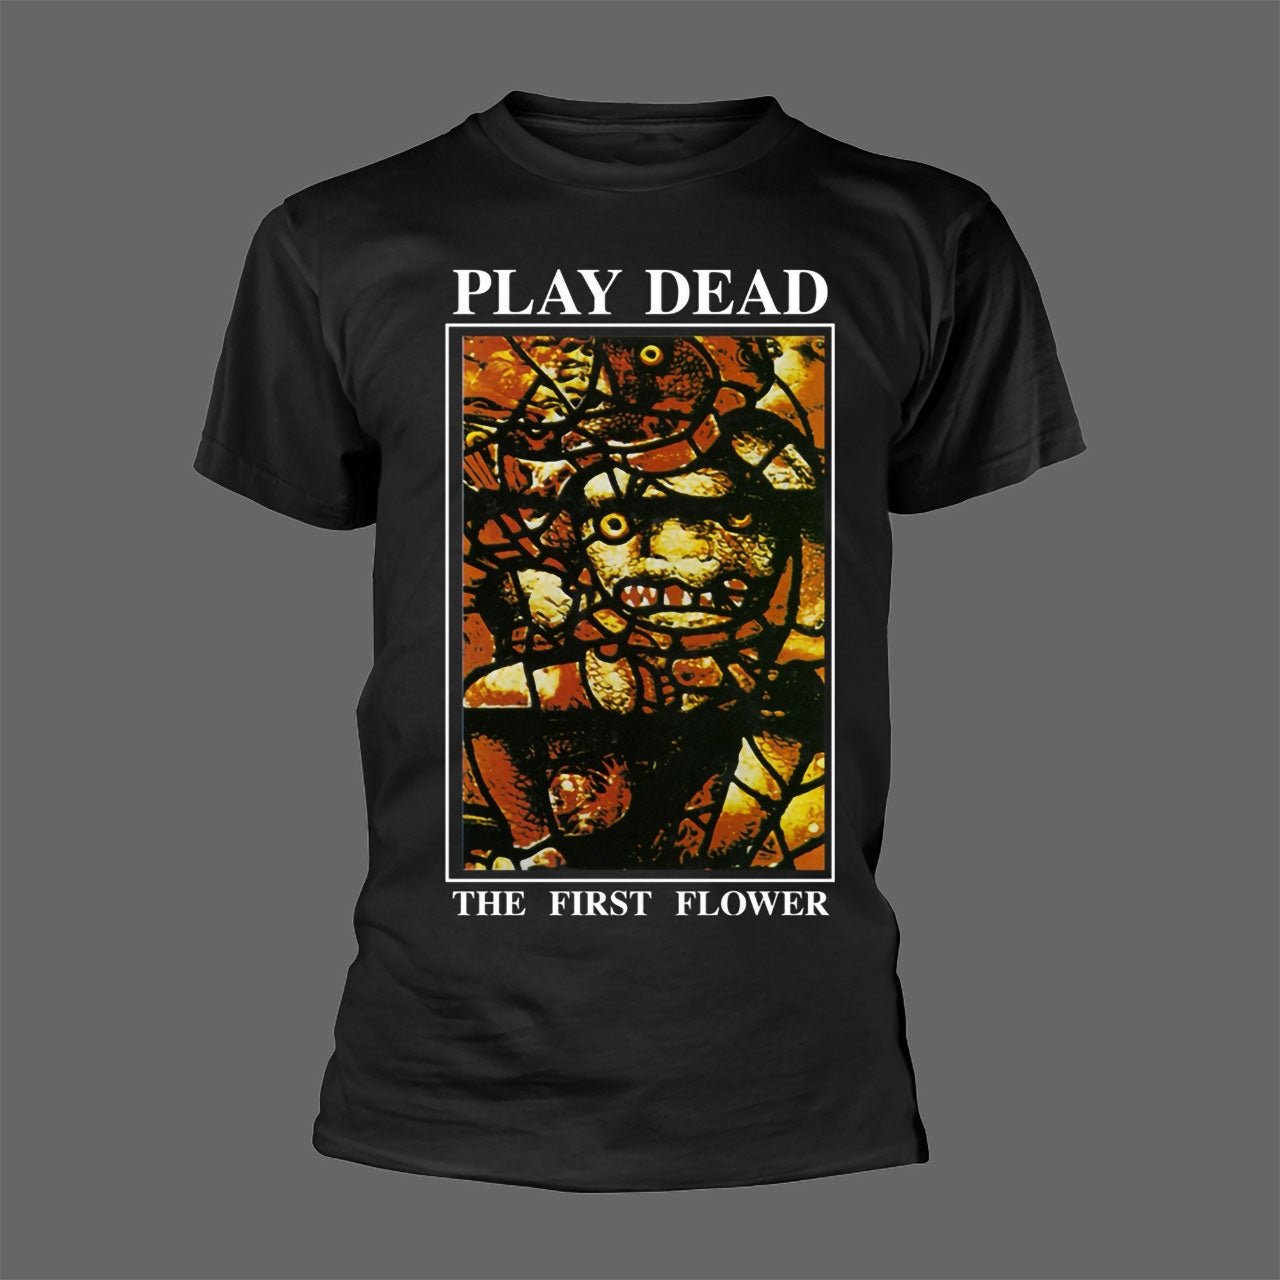 Play Dead - The First Flower (Black) (T-Shirt)